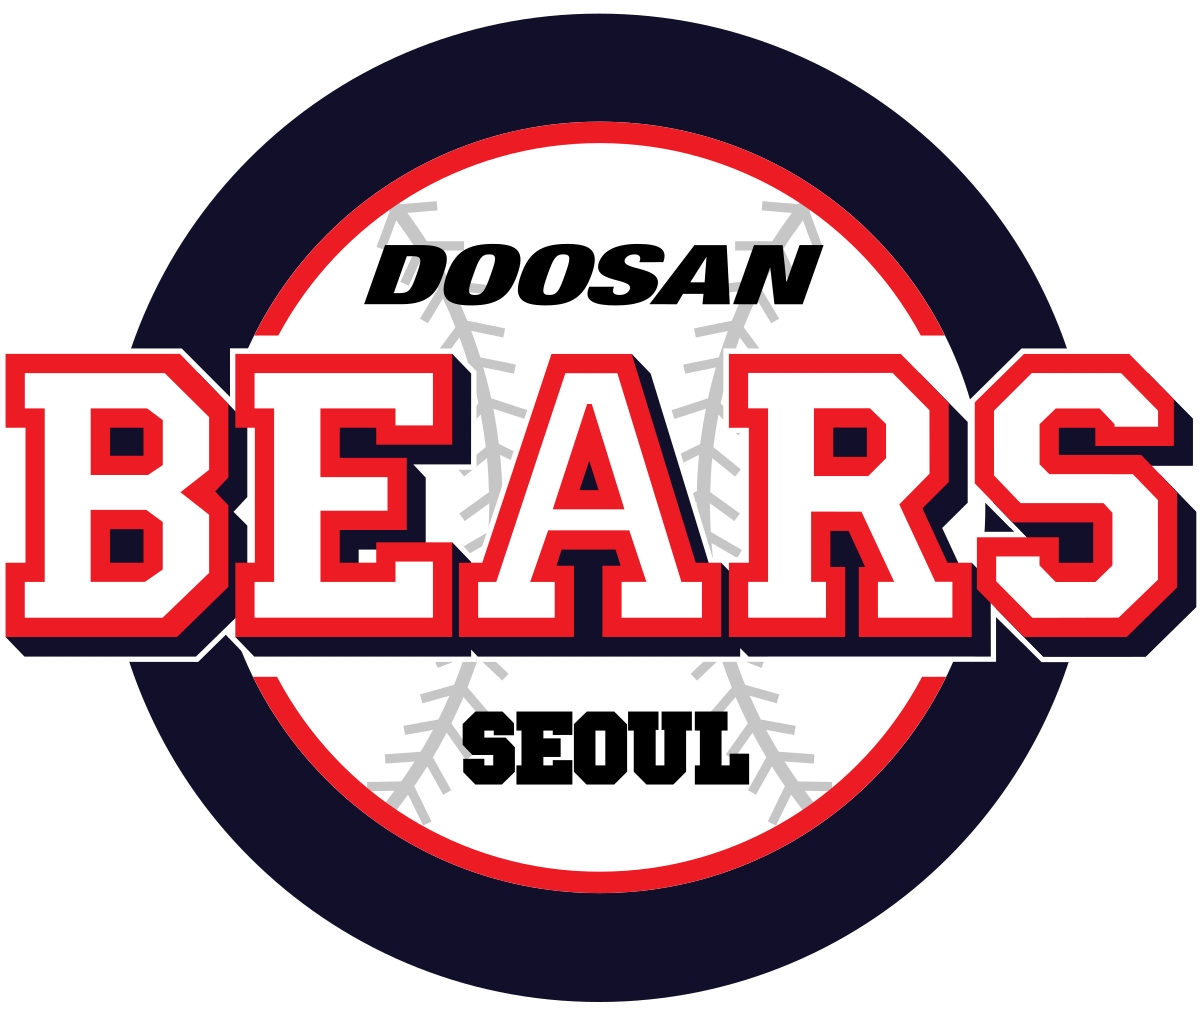 Doosan Bears - Wikipedia